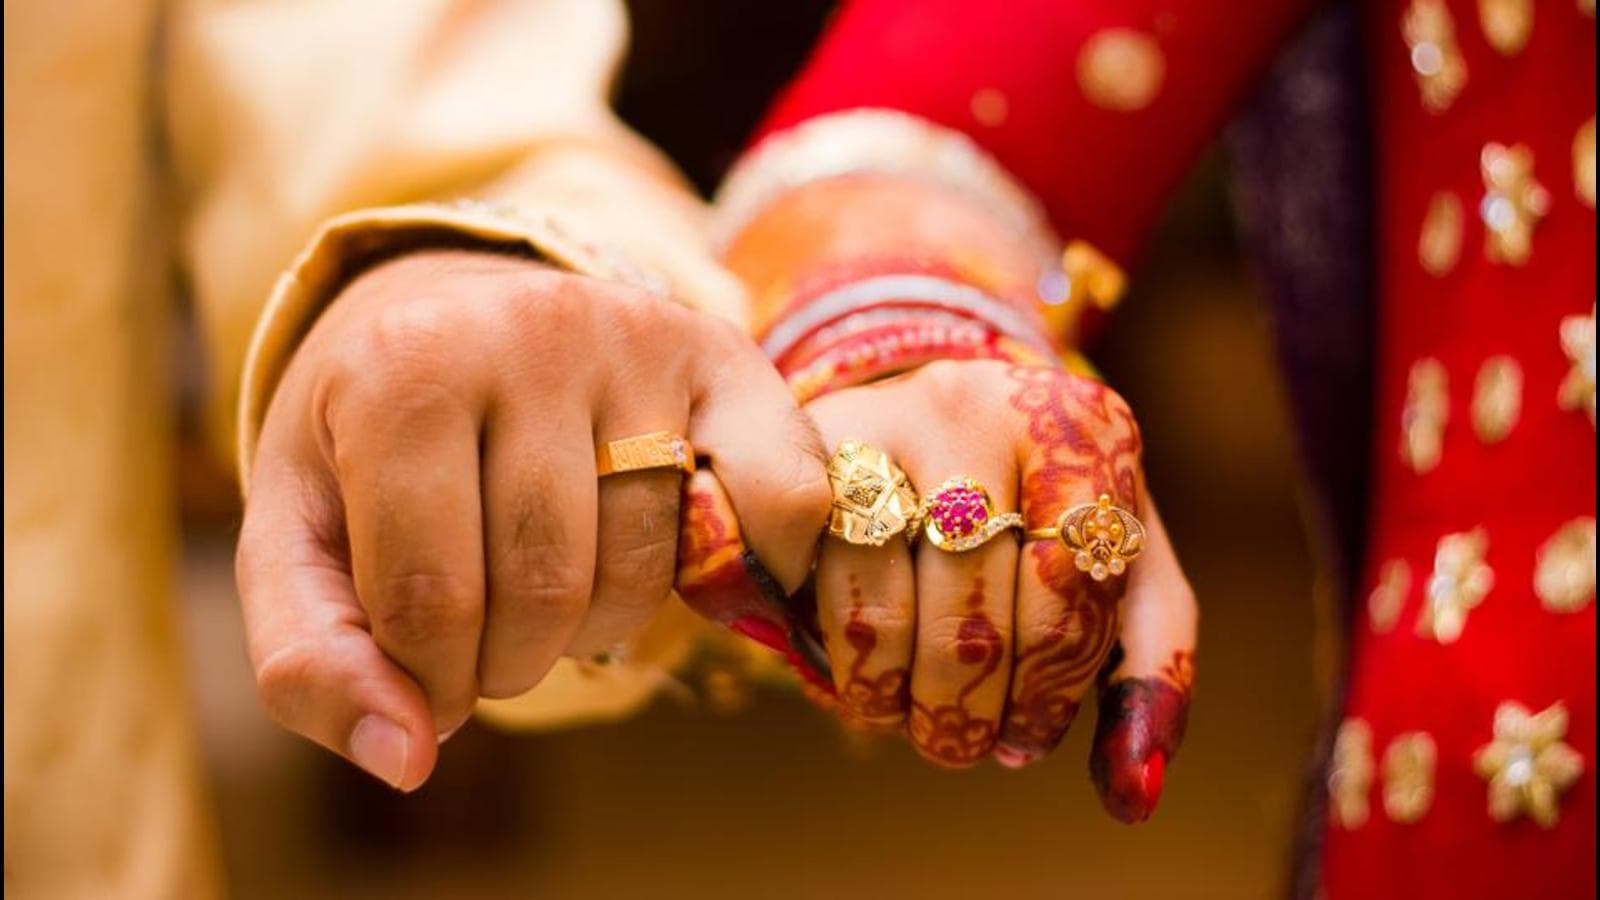 love marriage vs arranged marriage statistics